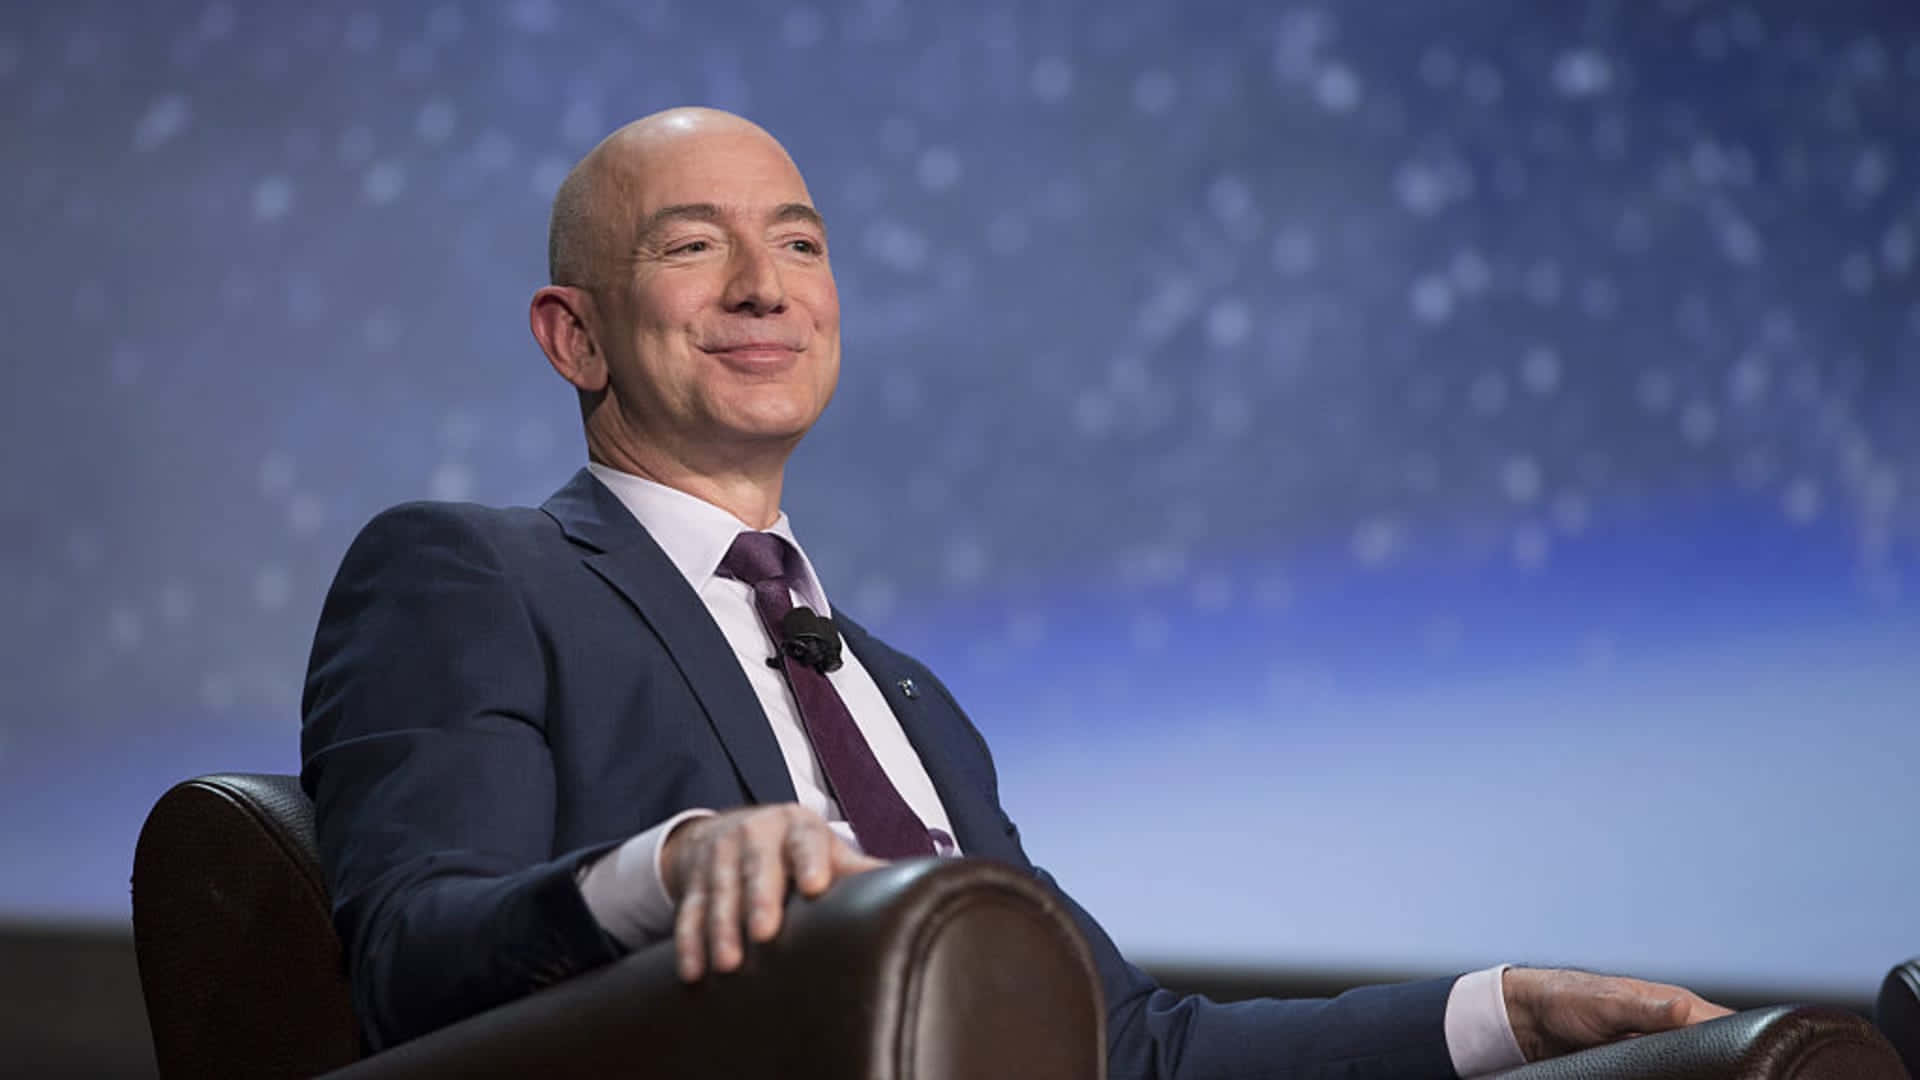 Jeff Bezos, Founder of Amazon, Smiling Against a Blue Background